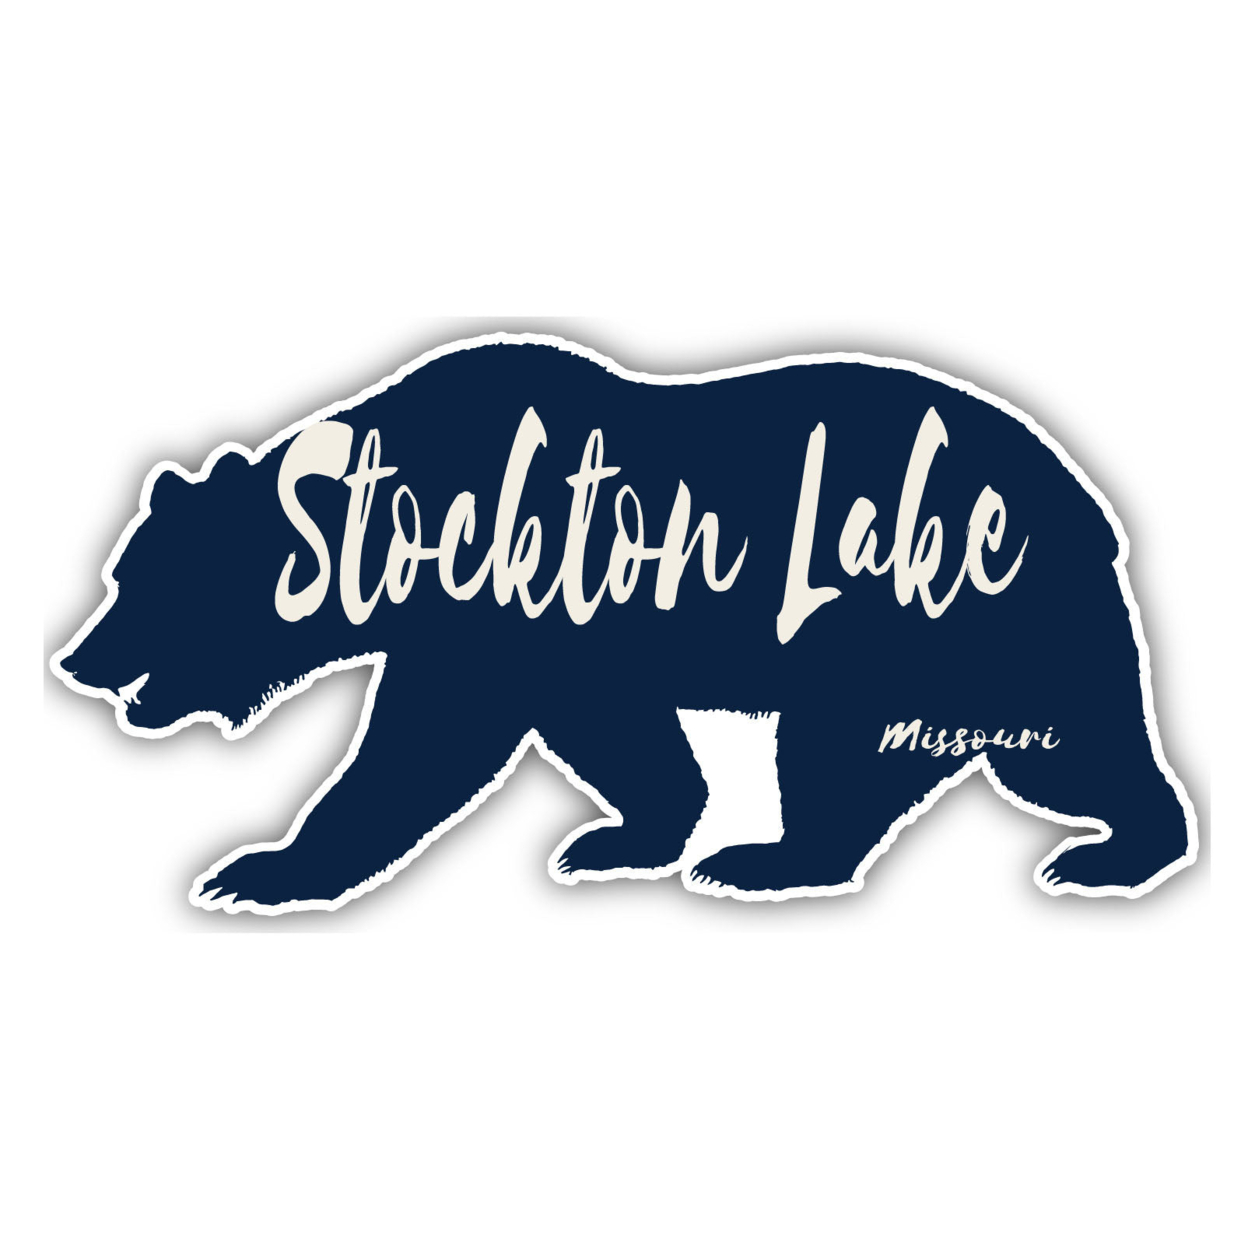 Stockton Lake Missouri Souvenir Decorative Stickers (Choose Theme And Size) - Single Unit, 4-Inch, Bear